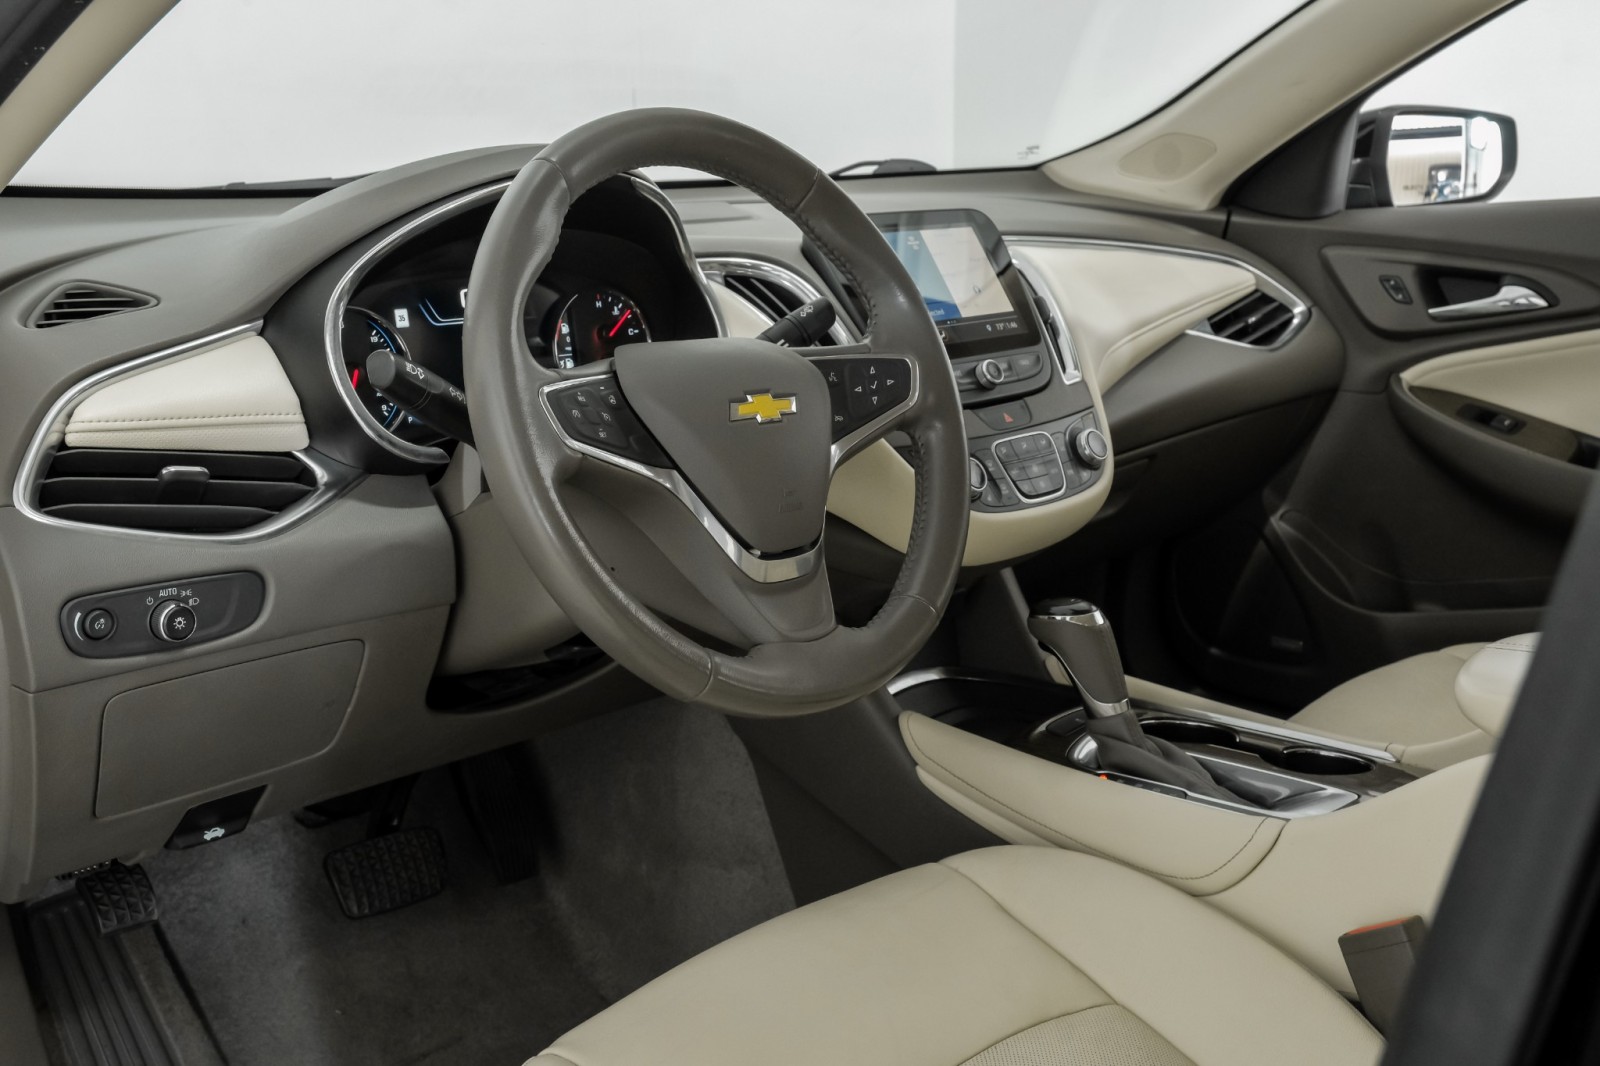 2019 Chevrolet Malibu PREMIER NAVIGATION LEATHER SEATS REAR CAMERA KEYEL 14